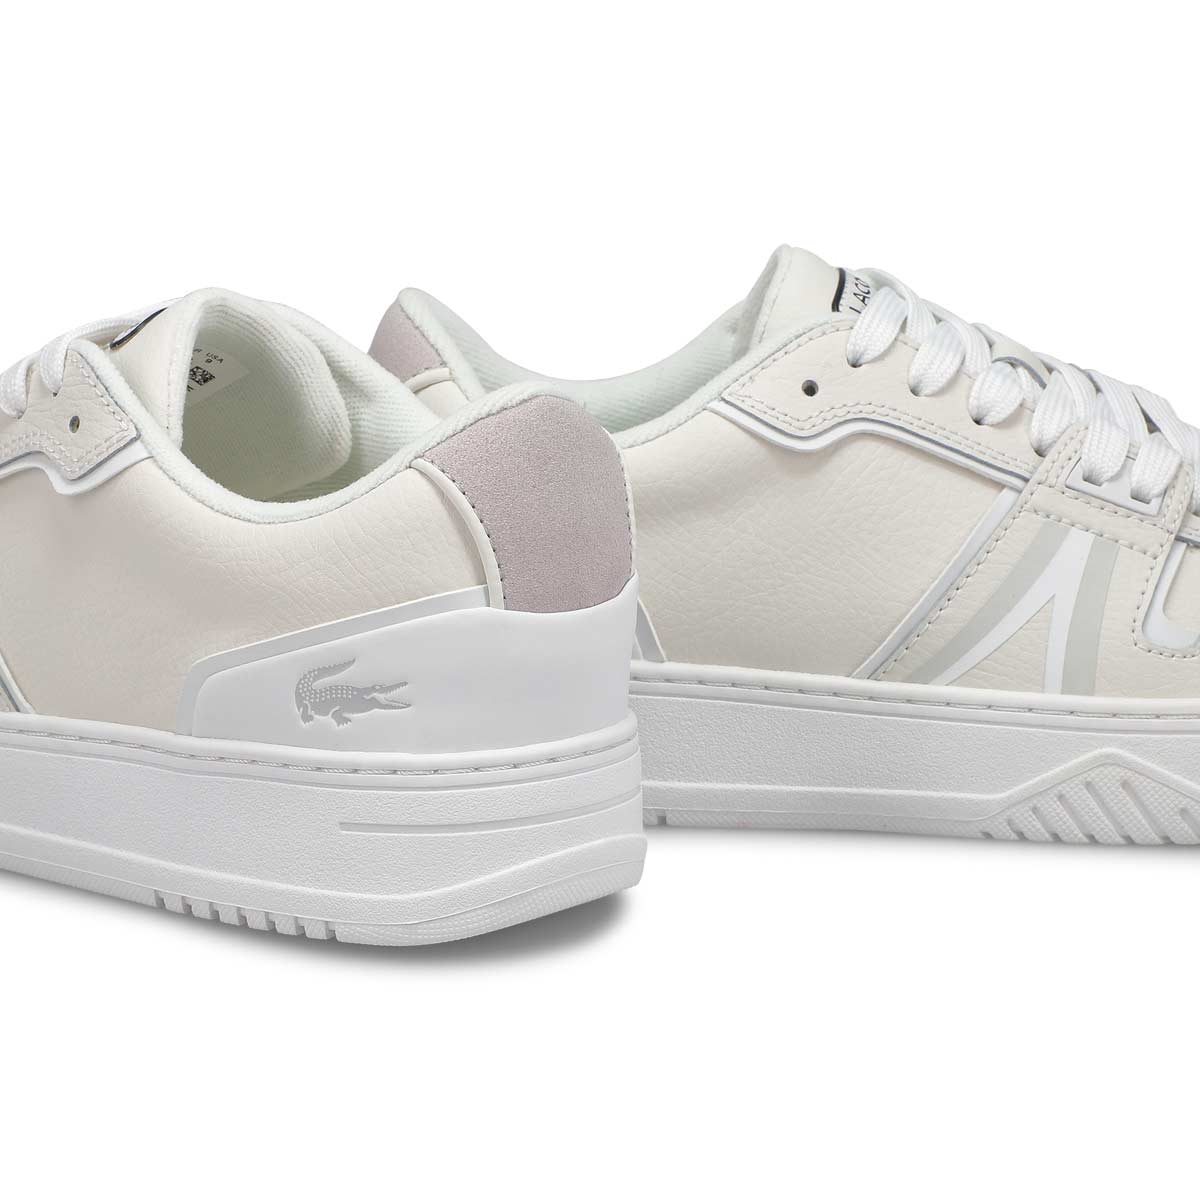 Men's L001 Sneaker - White/Off-White